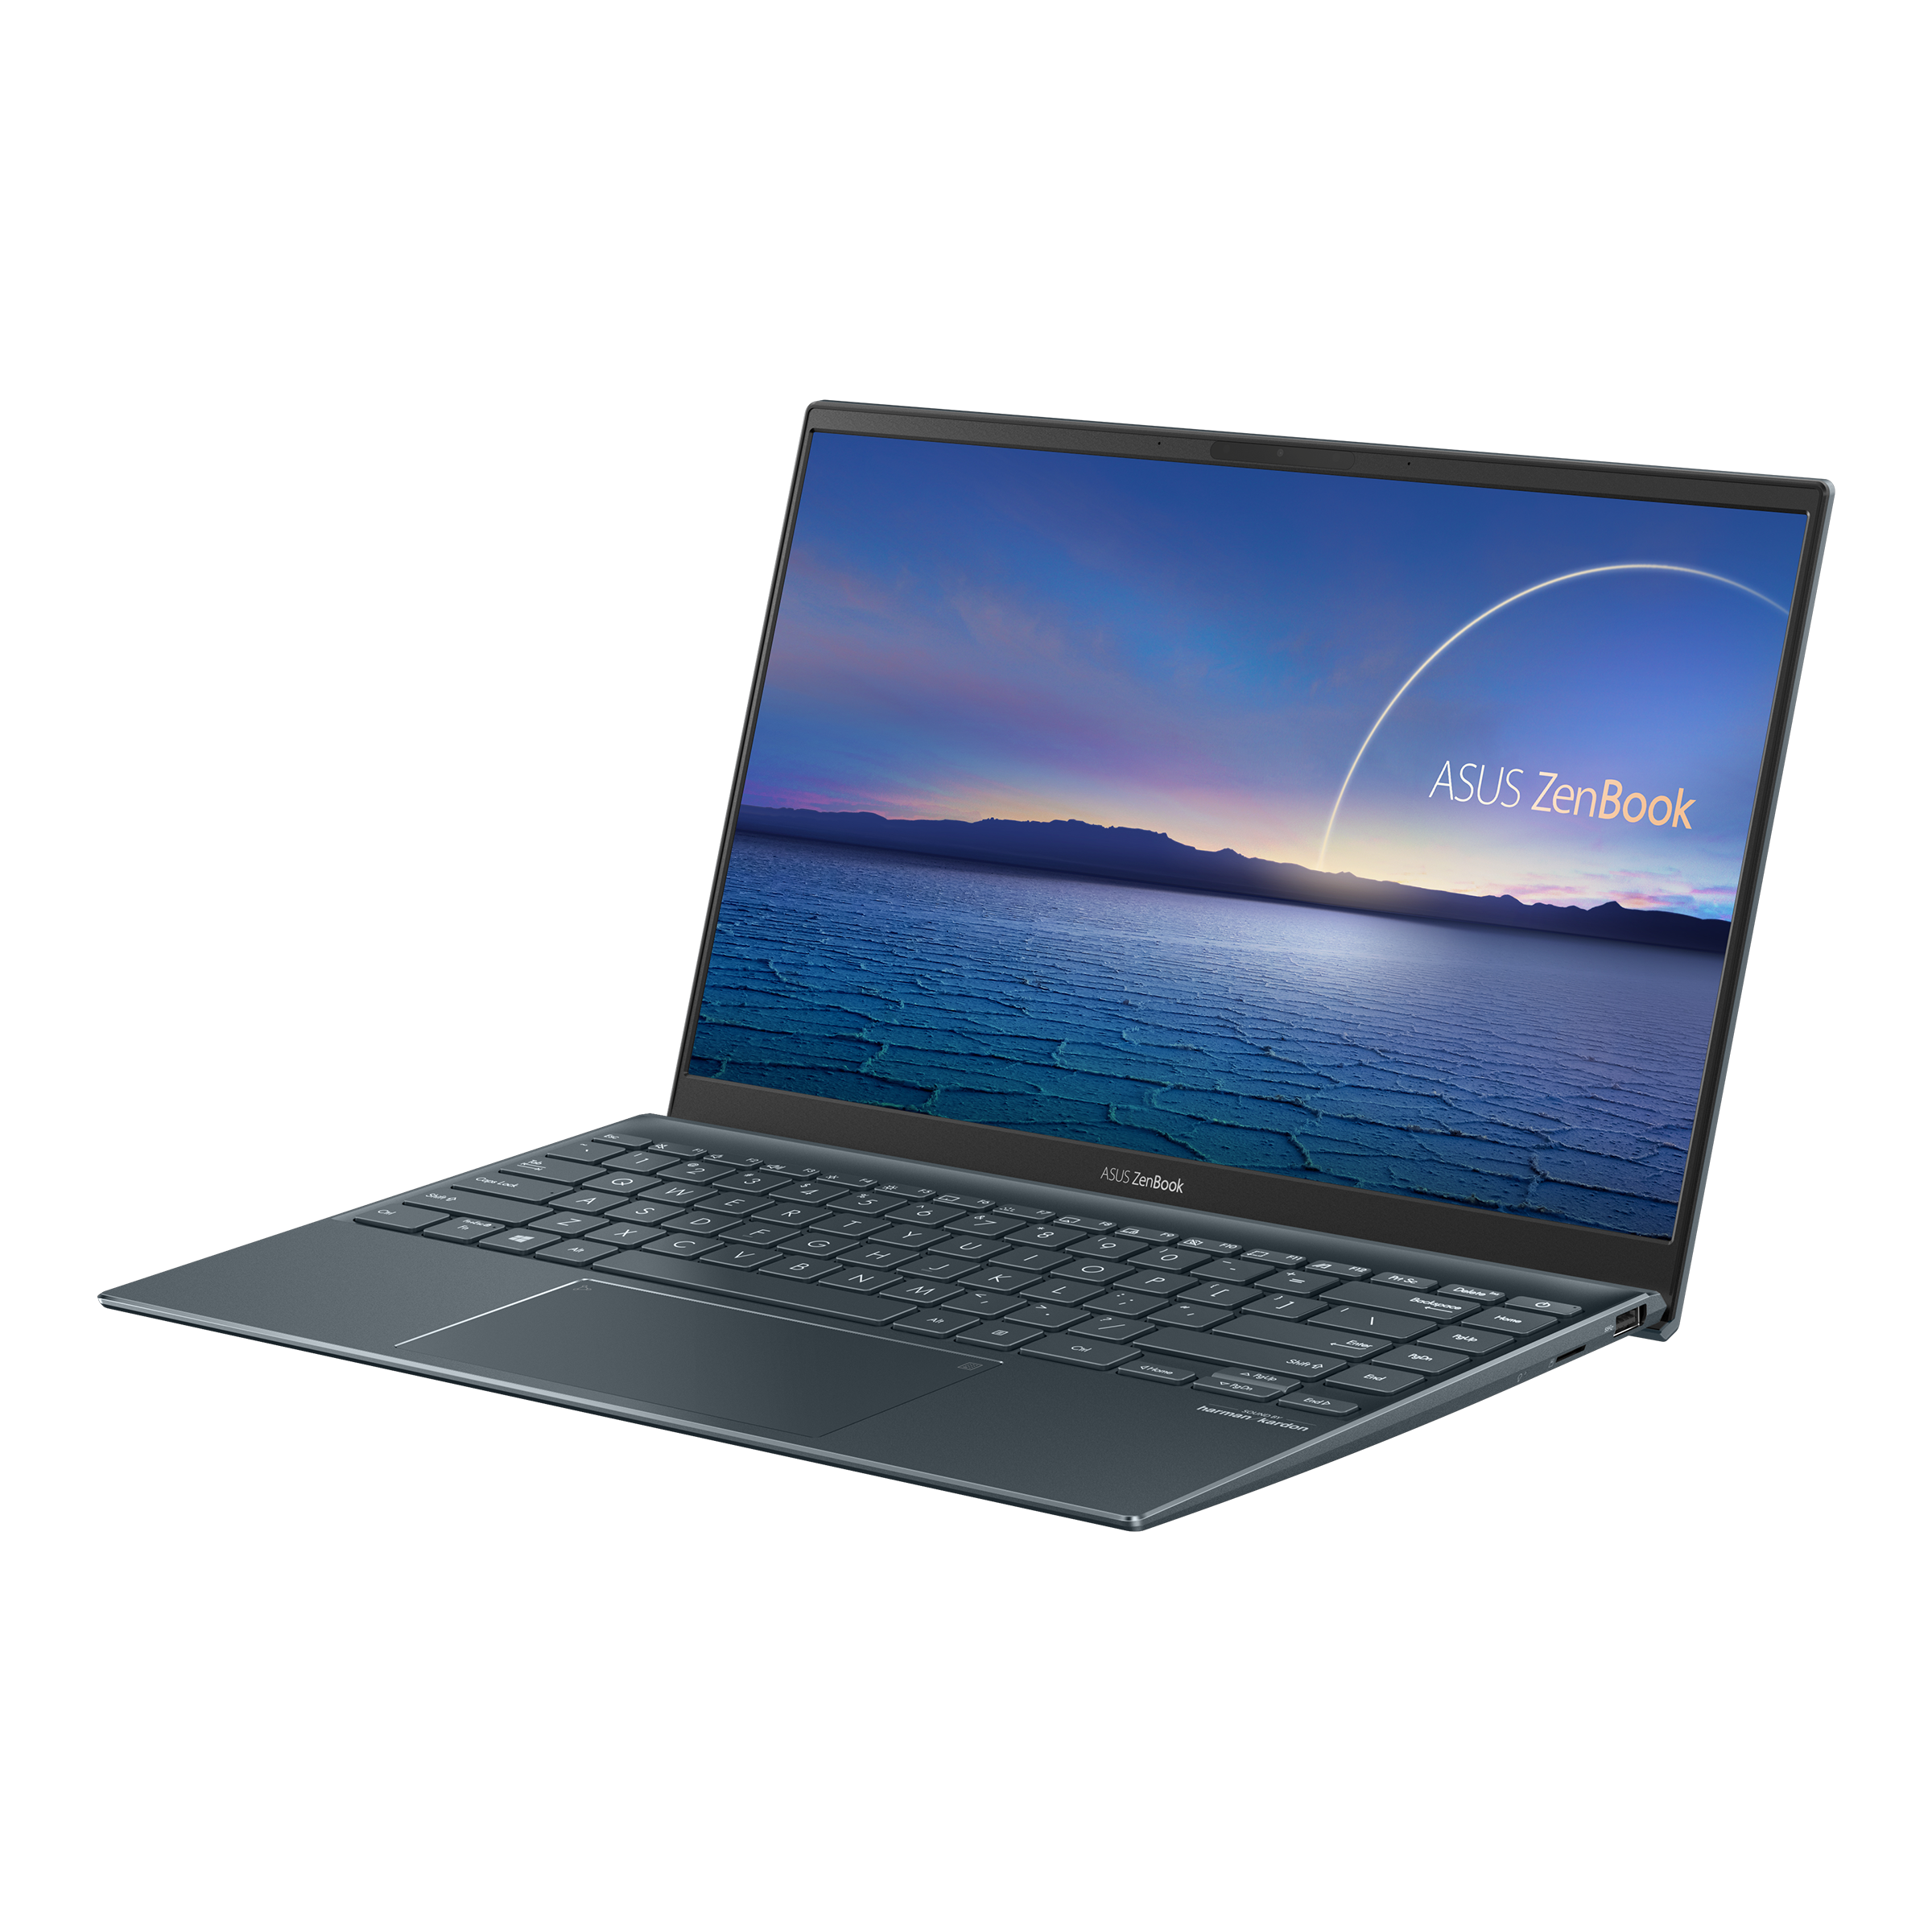 Asus Zenbook 14 UX425EA-HA663WS- Laptop Tiangge